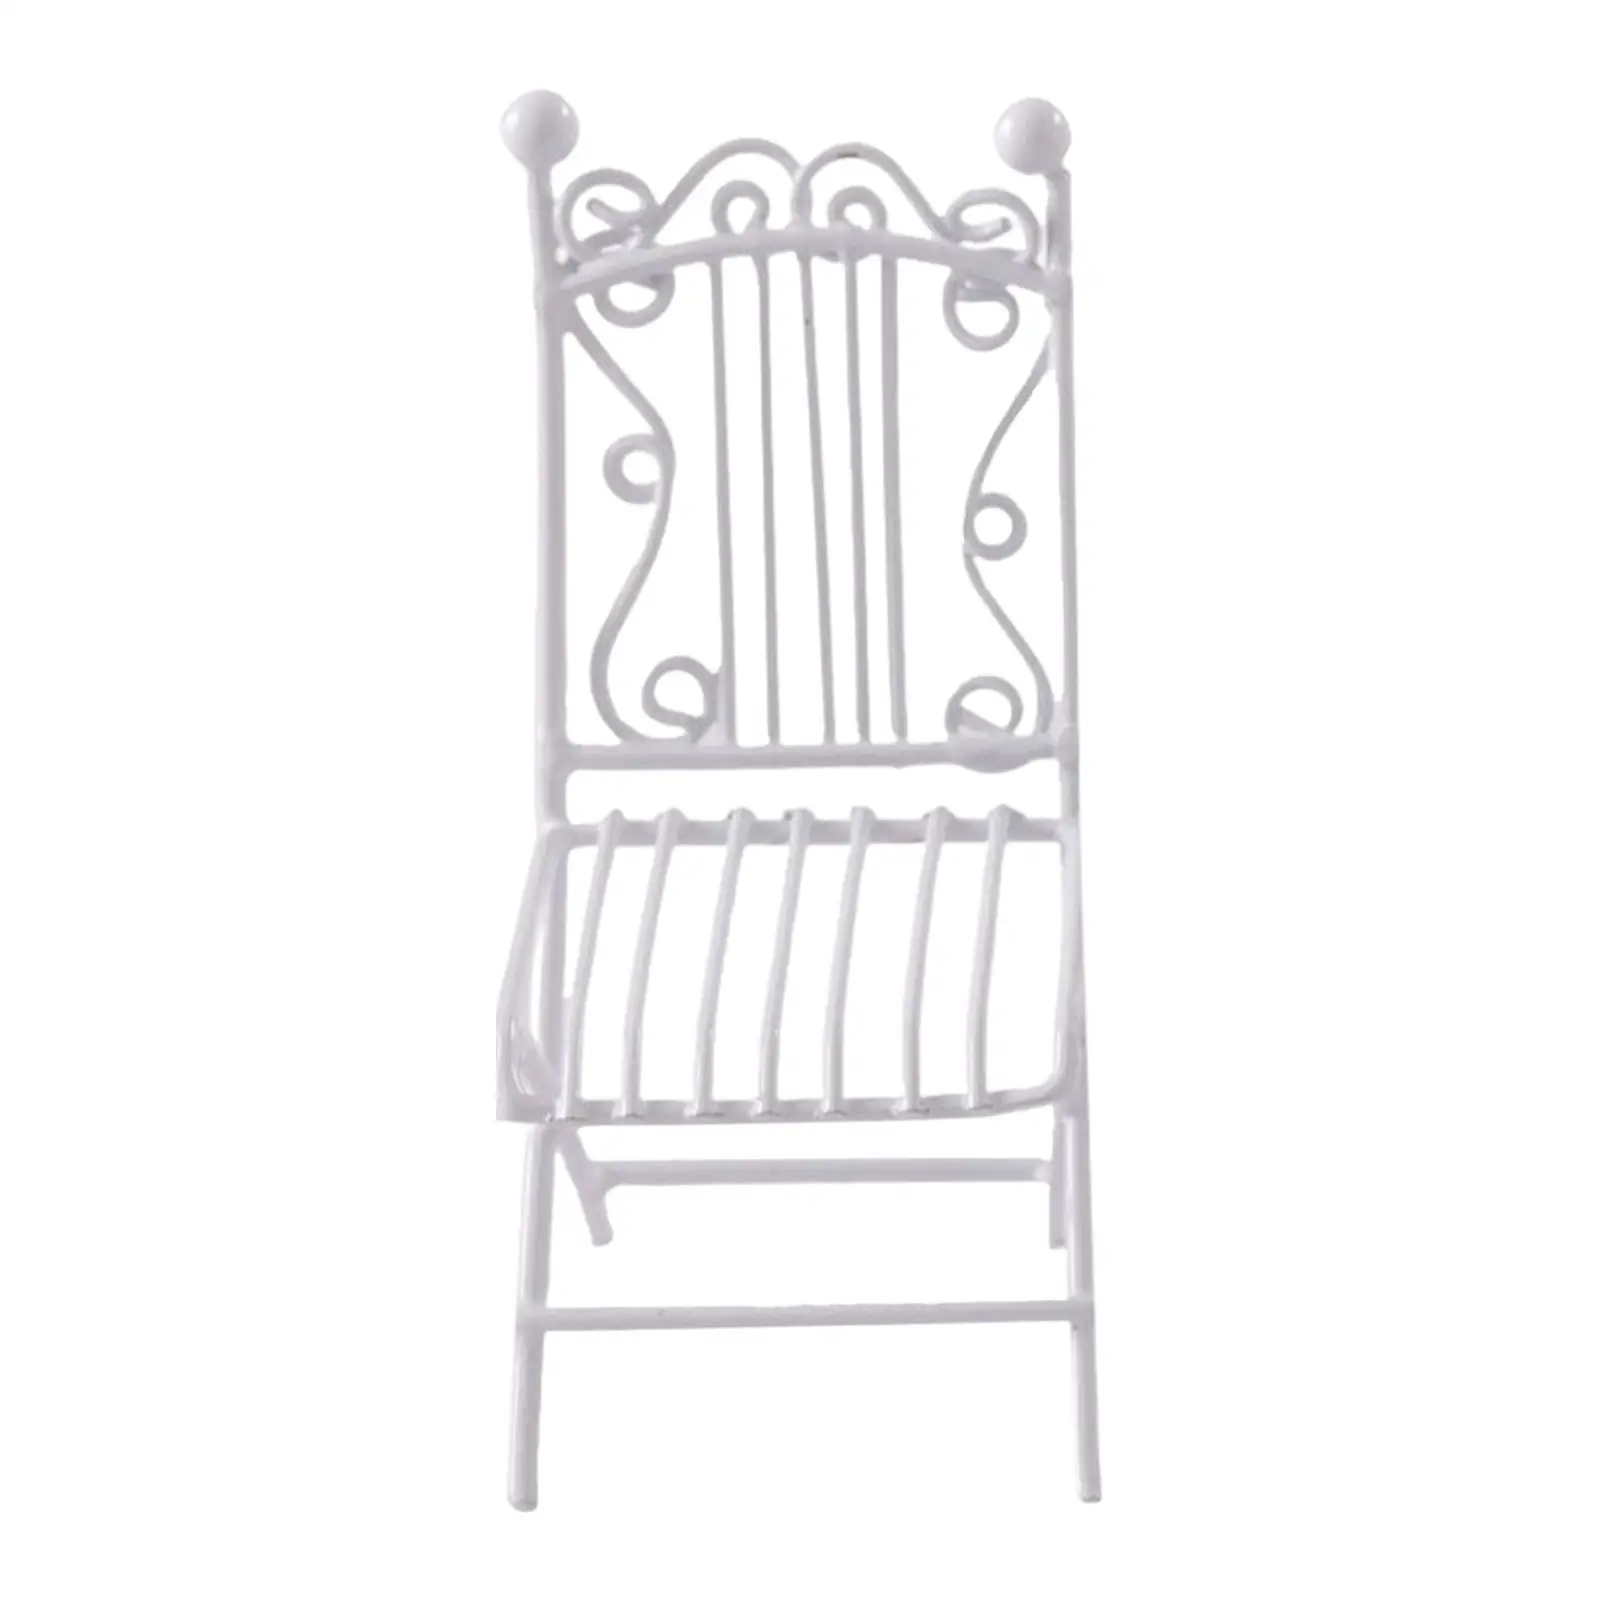 1:12 Dollhouse Table Chair Rustic Elegant DIY Scene Crafts